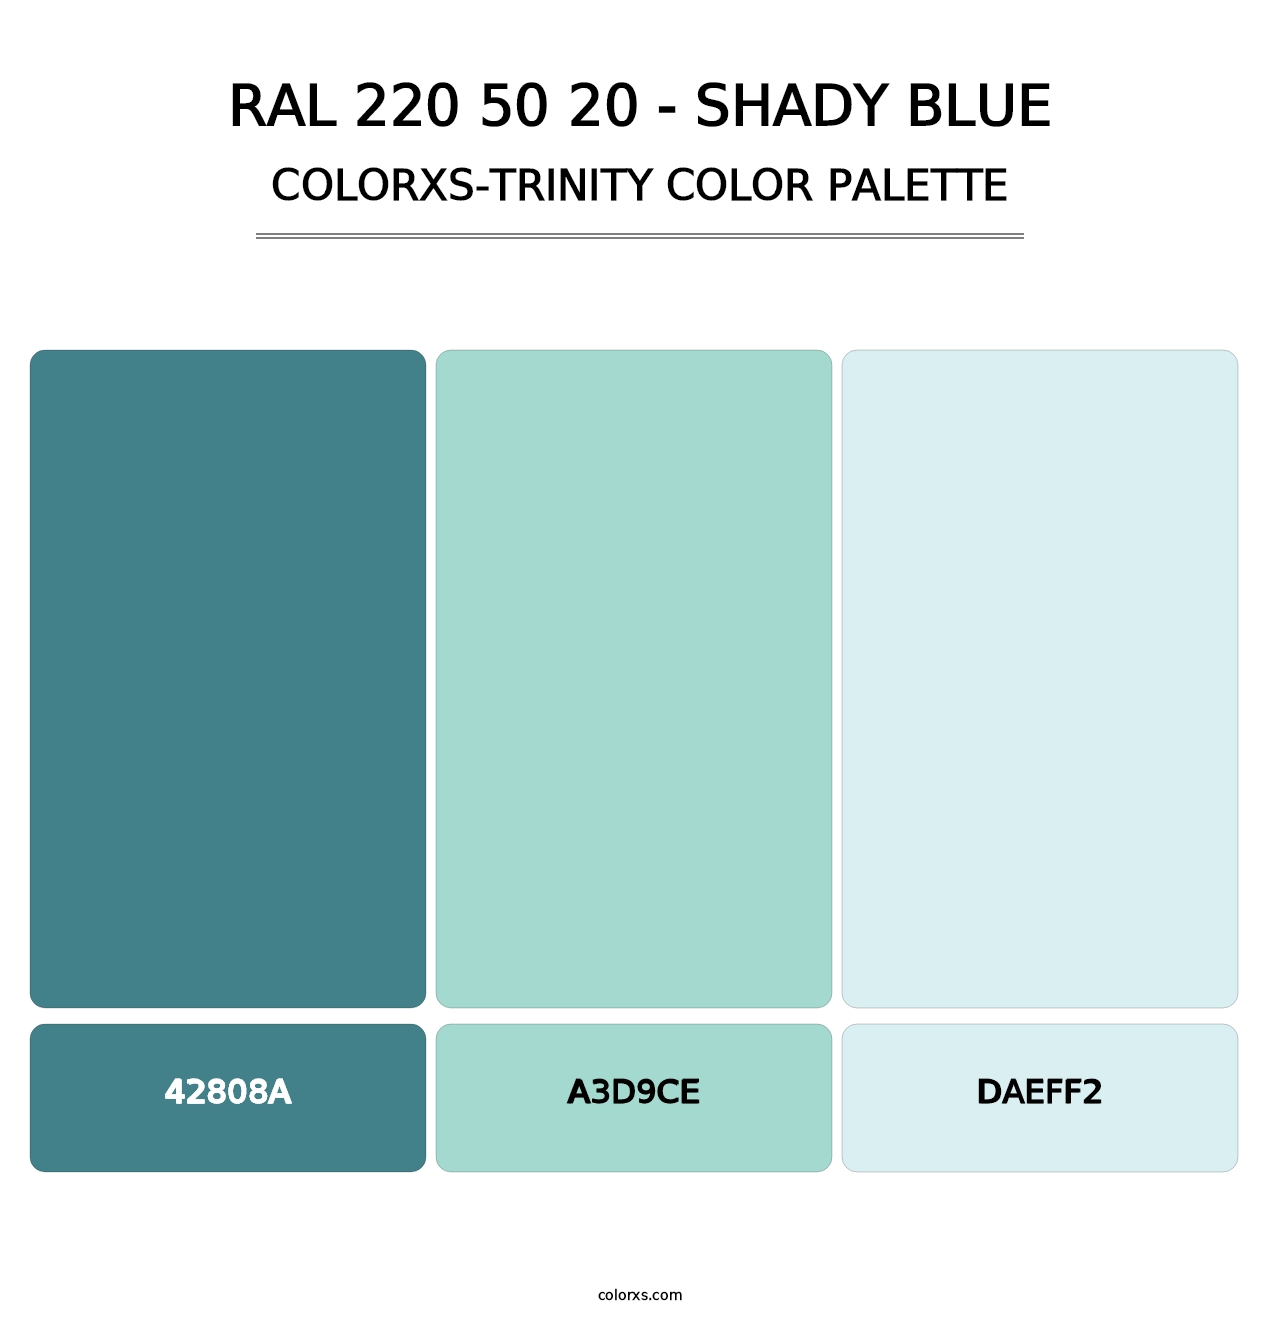 RAL 220 50 20 - Shady Blue - Colorxs Trinity Palette